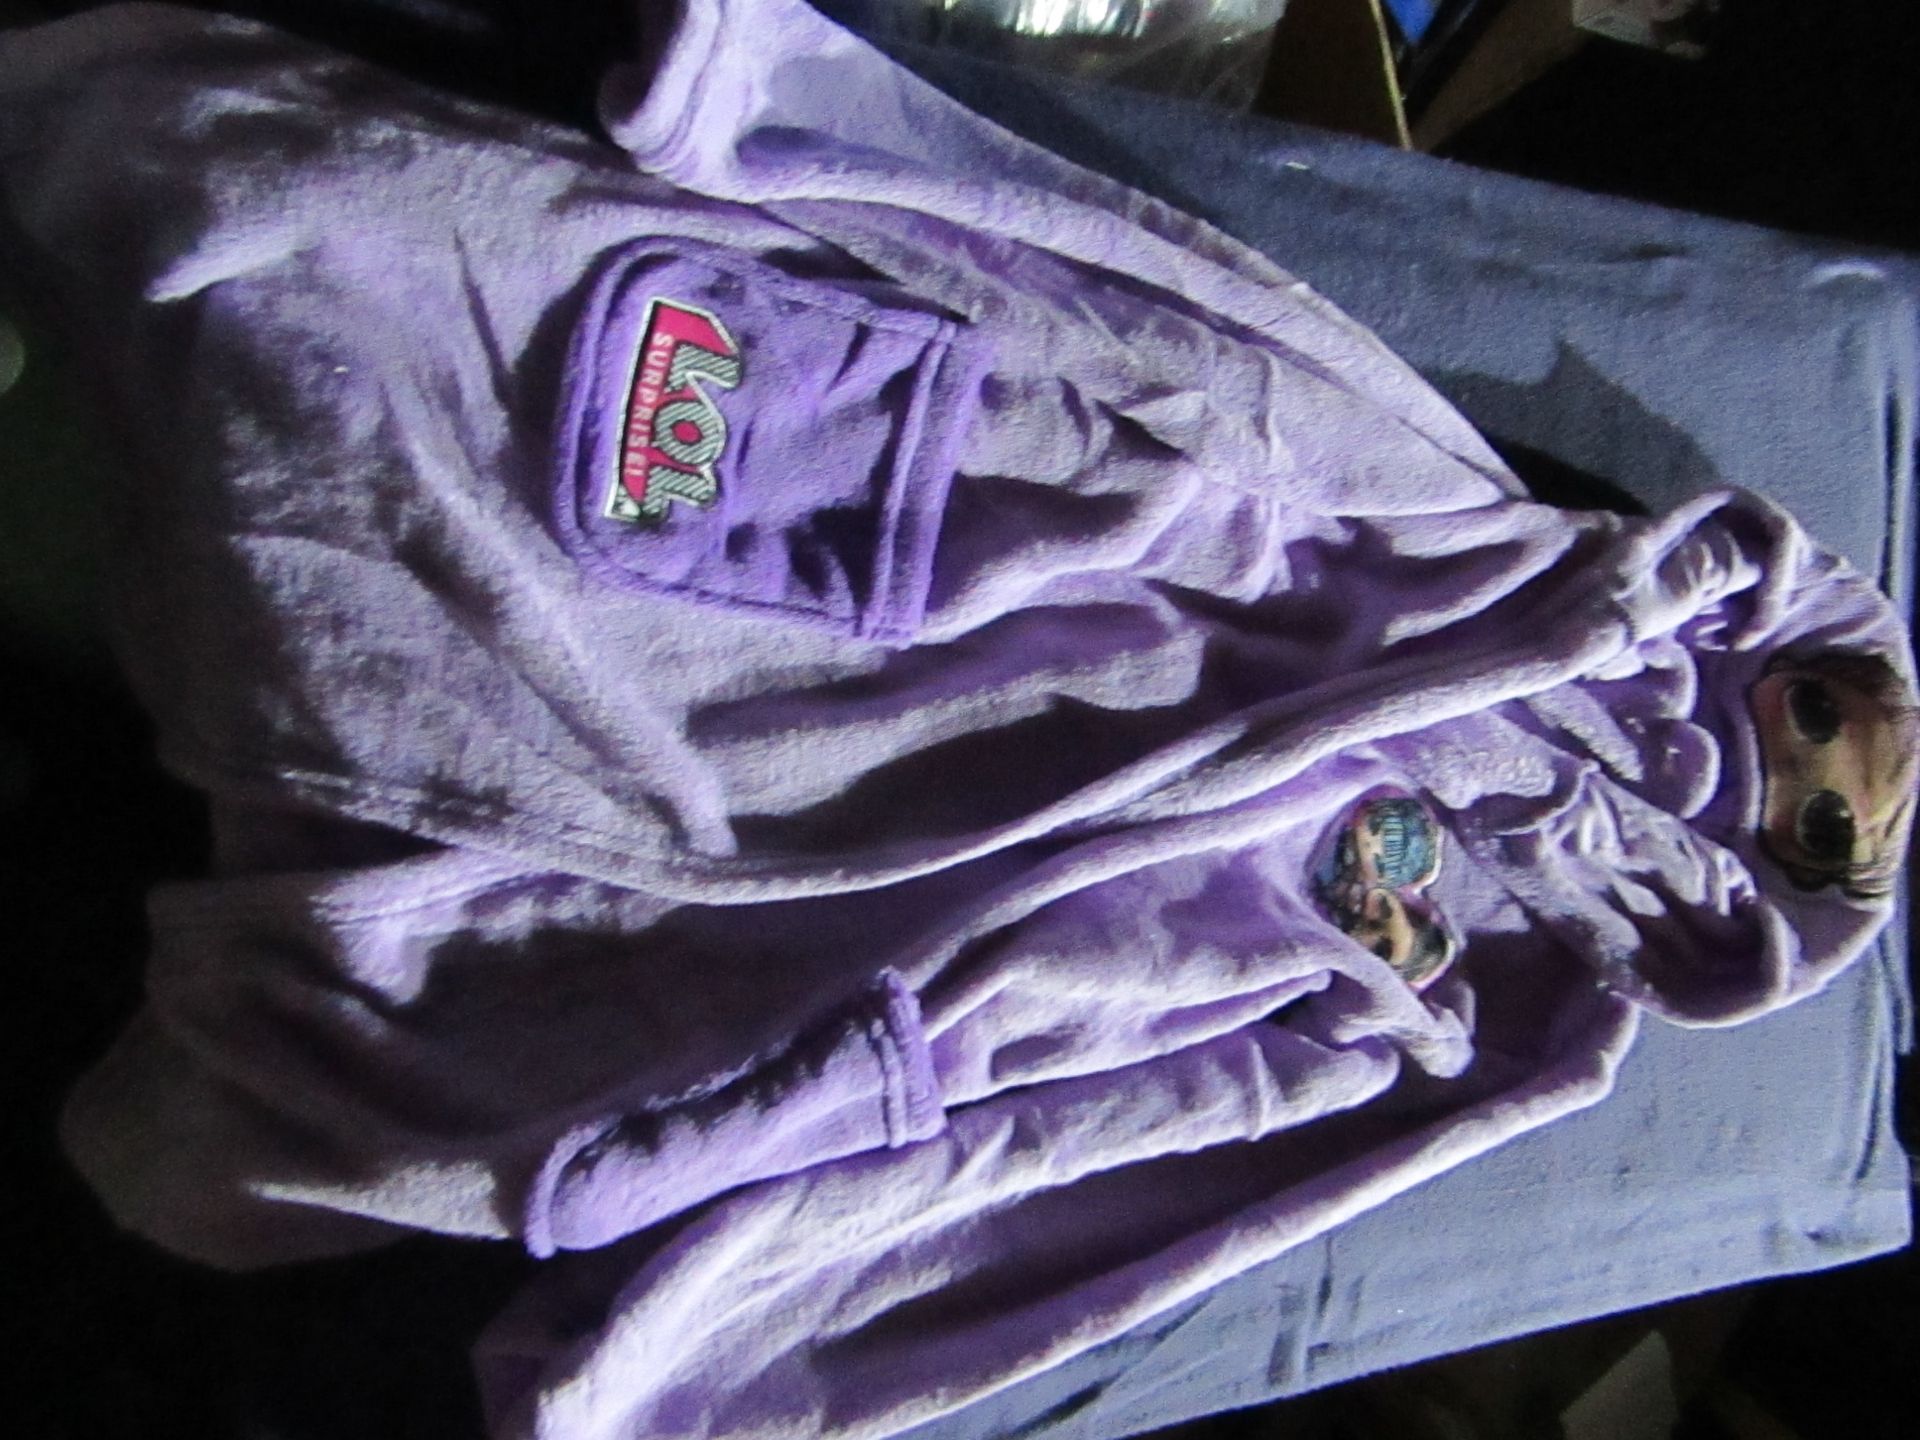 LOL Surprise - Purple Bath Robe - Size 12/13 Years - Unused & Packaged.